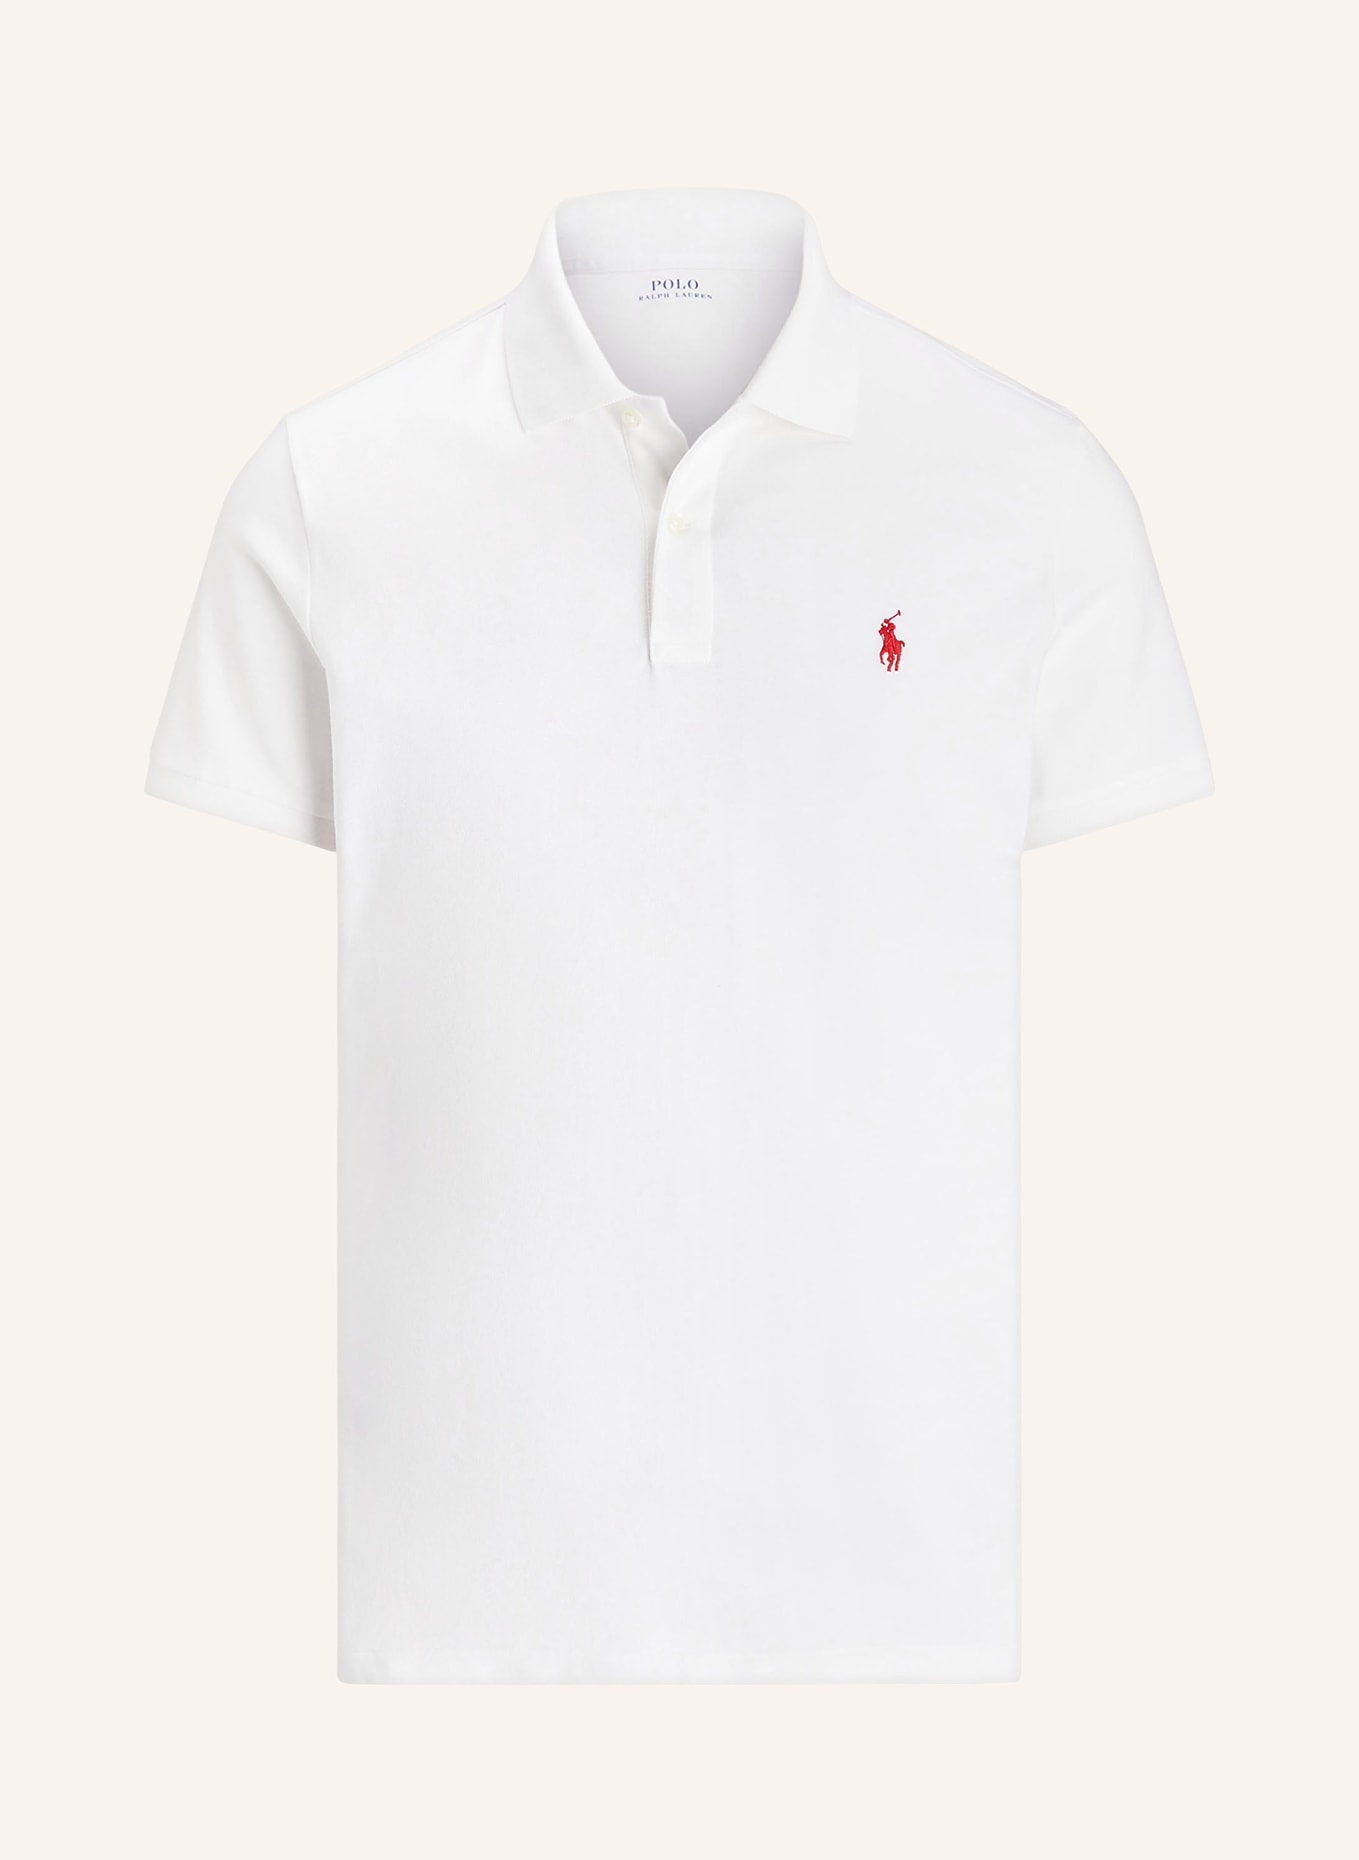 POLO GOLF RALPH LAUREN Performance polo shirt, Color: WHITE (Image 1)